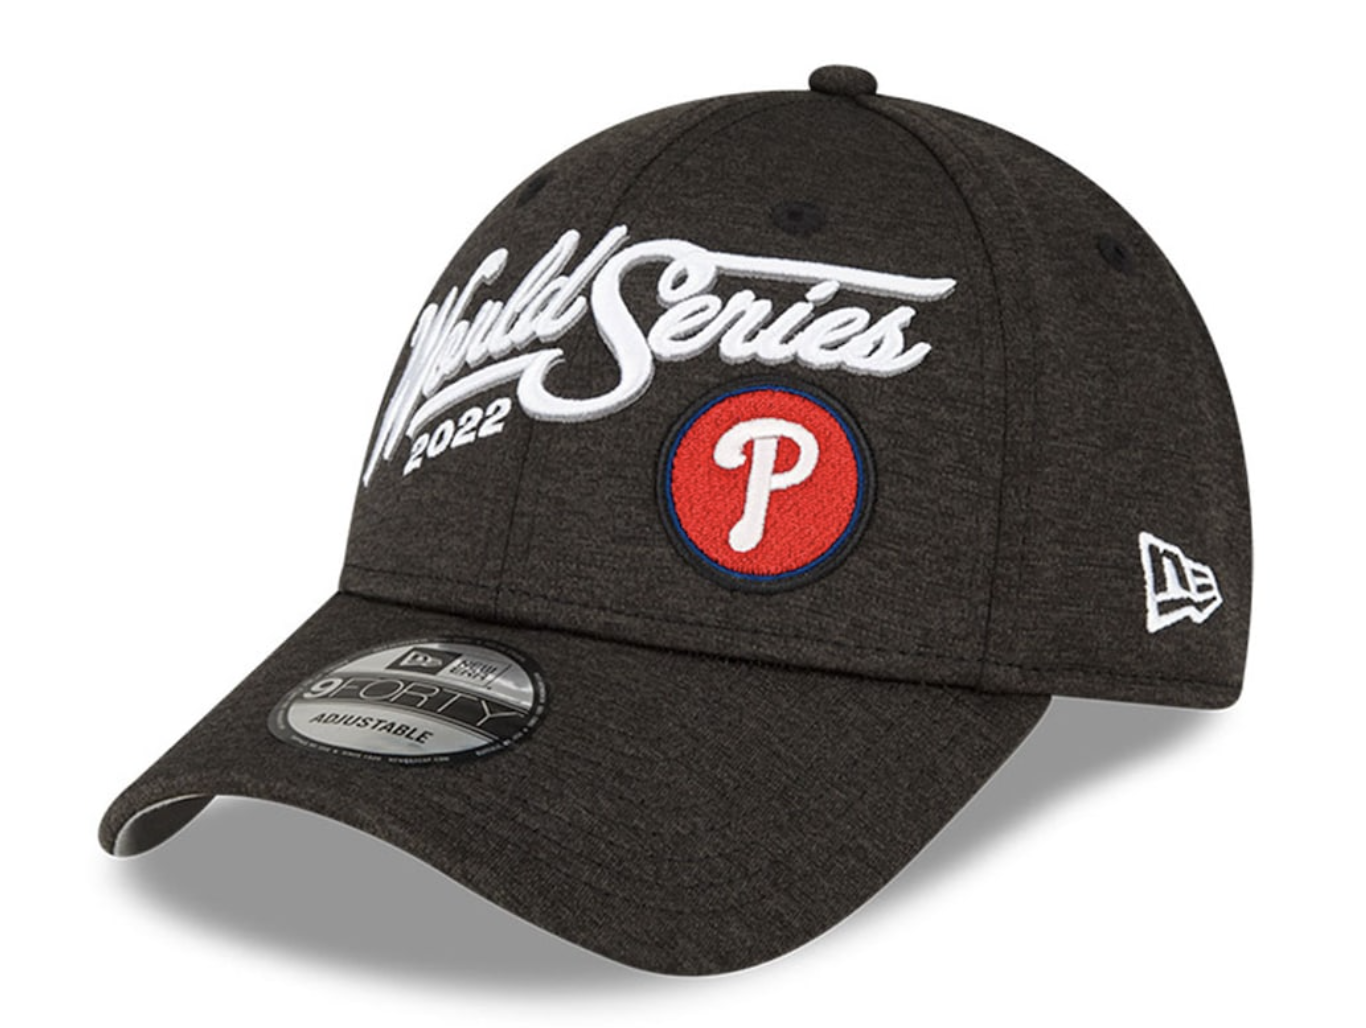 MLB World Series gear: 2022 Phillies vs. Astros hats, shirts